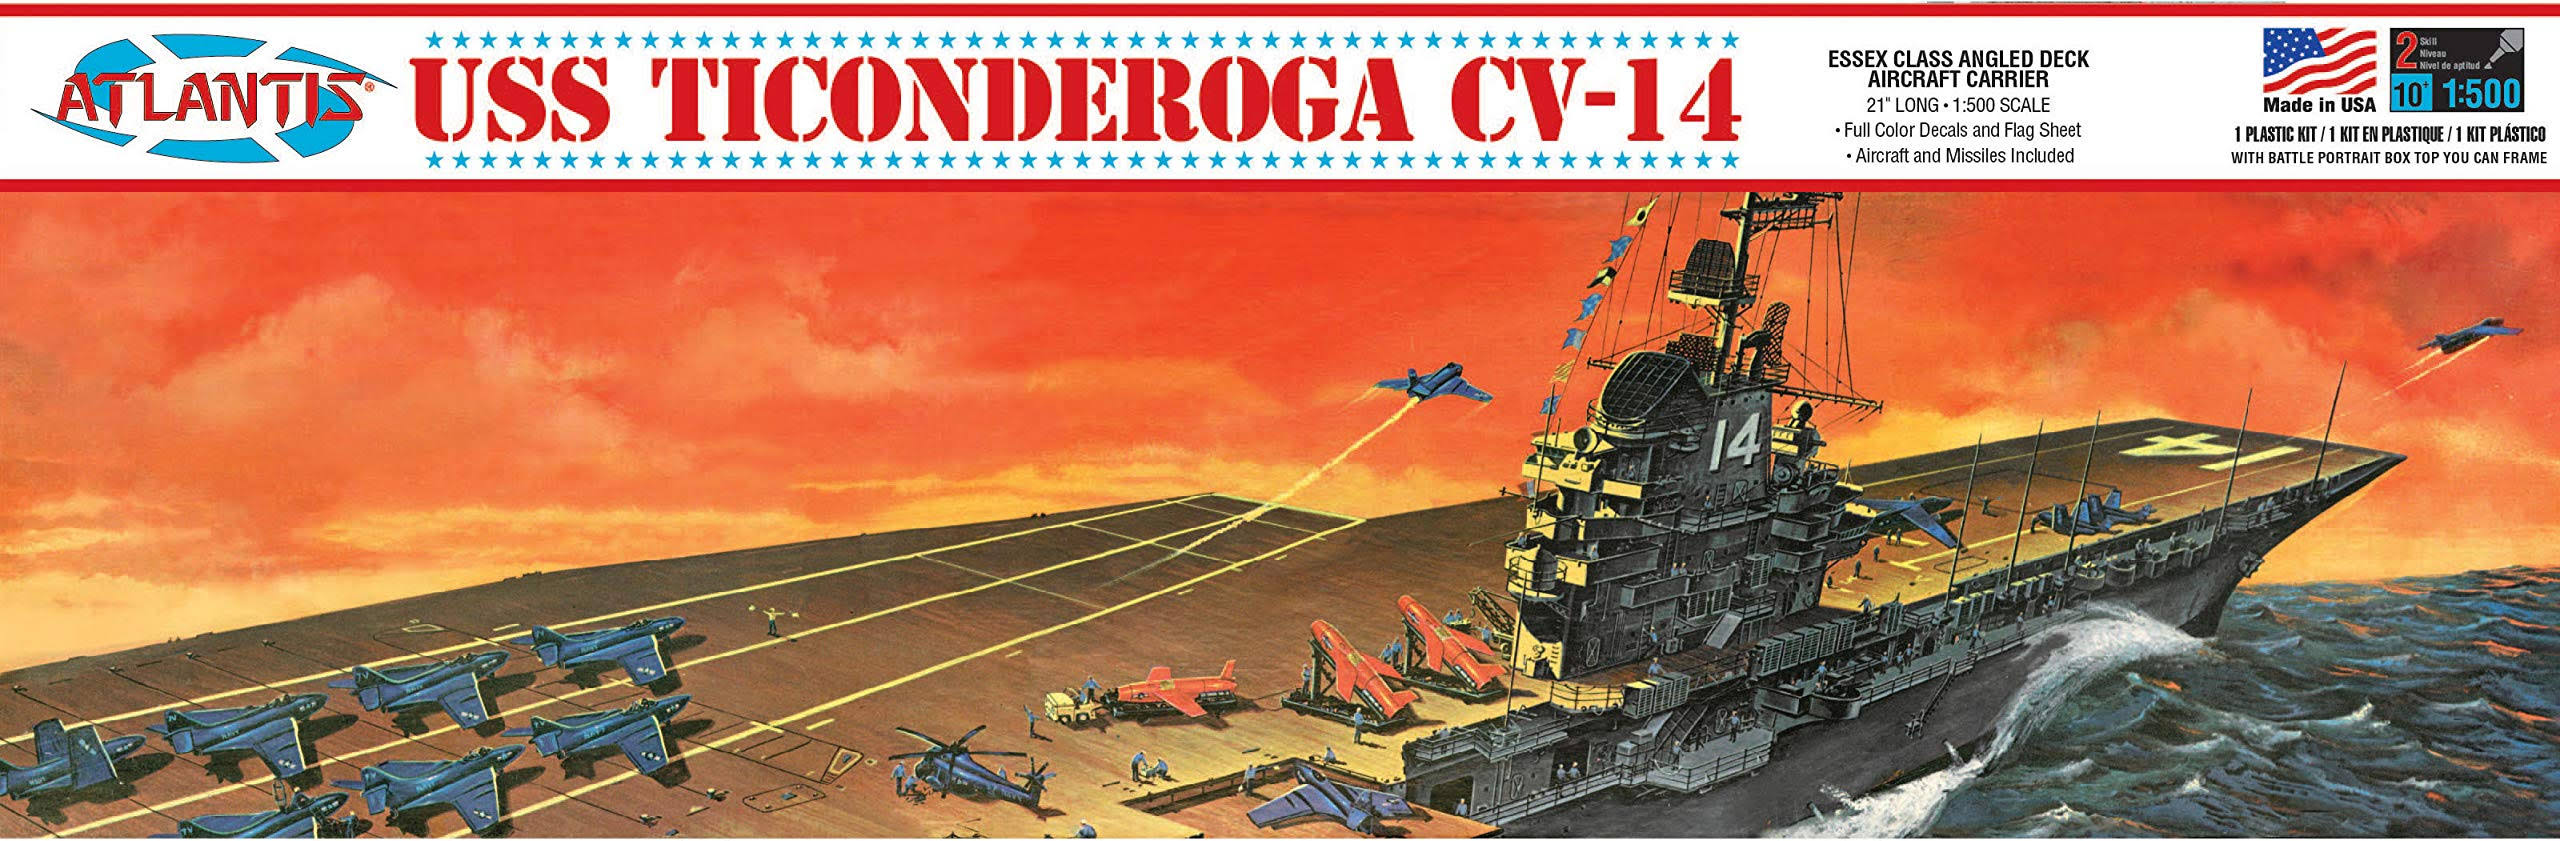 USS Ticonderoga CV-14 1/500 Angled Deck Aircraft Carrier Atlantis Toy